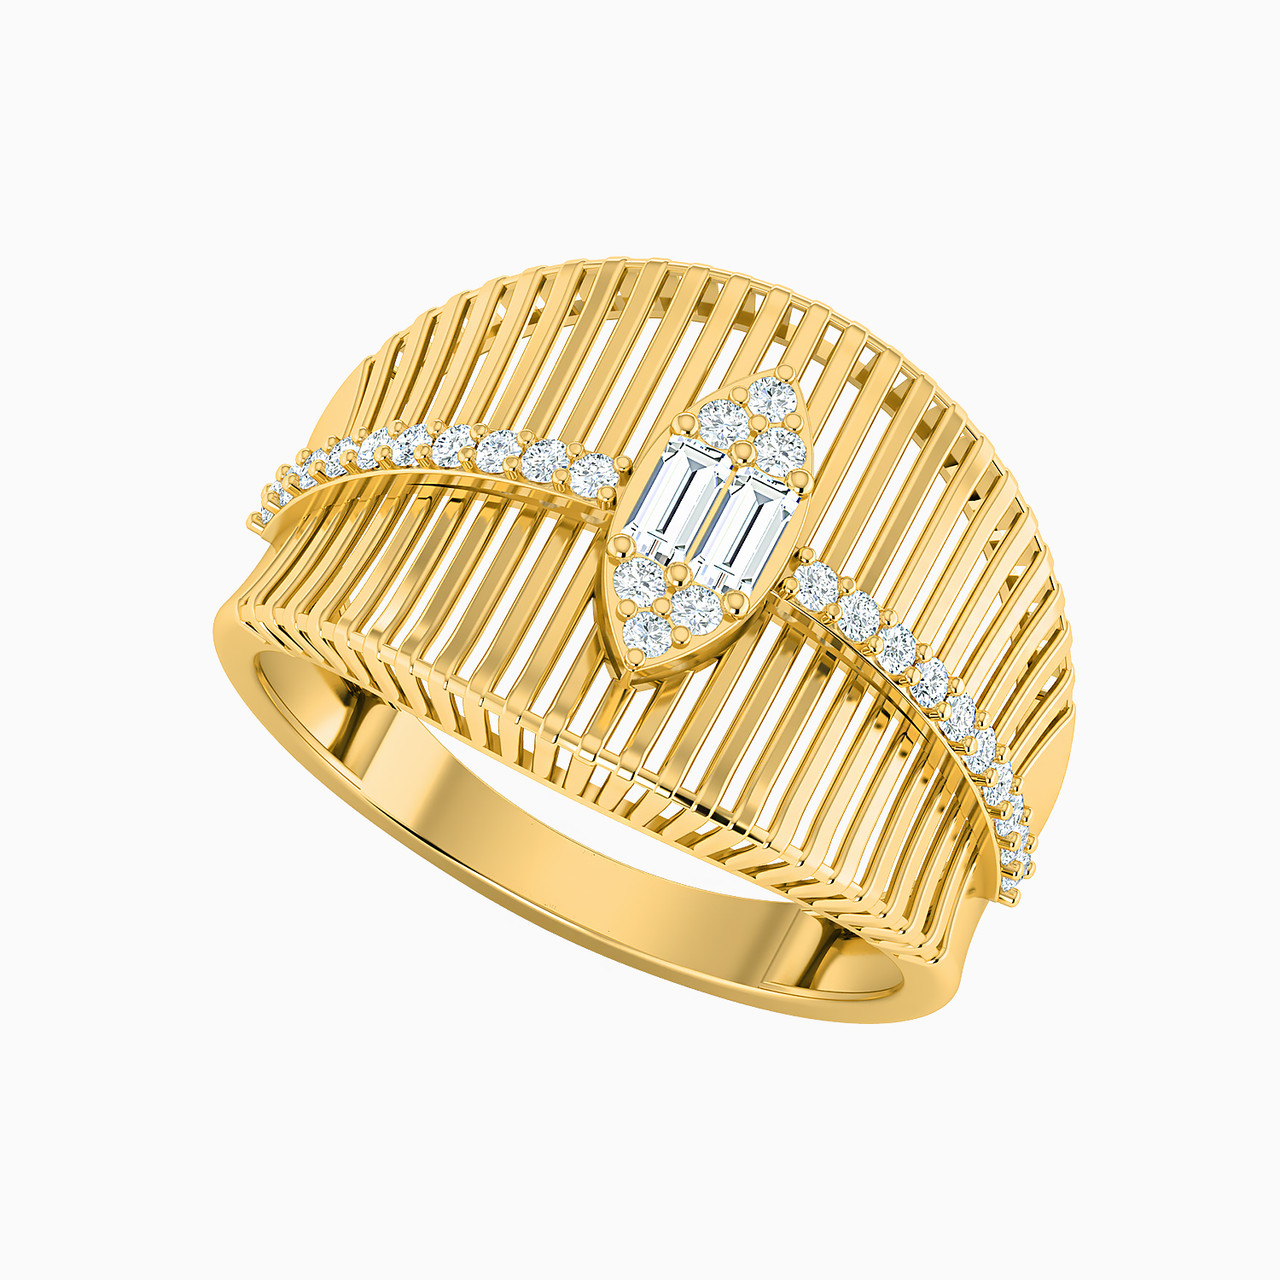 21K Gold Cubic Zirconia Statement Ring